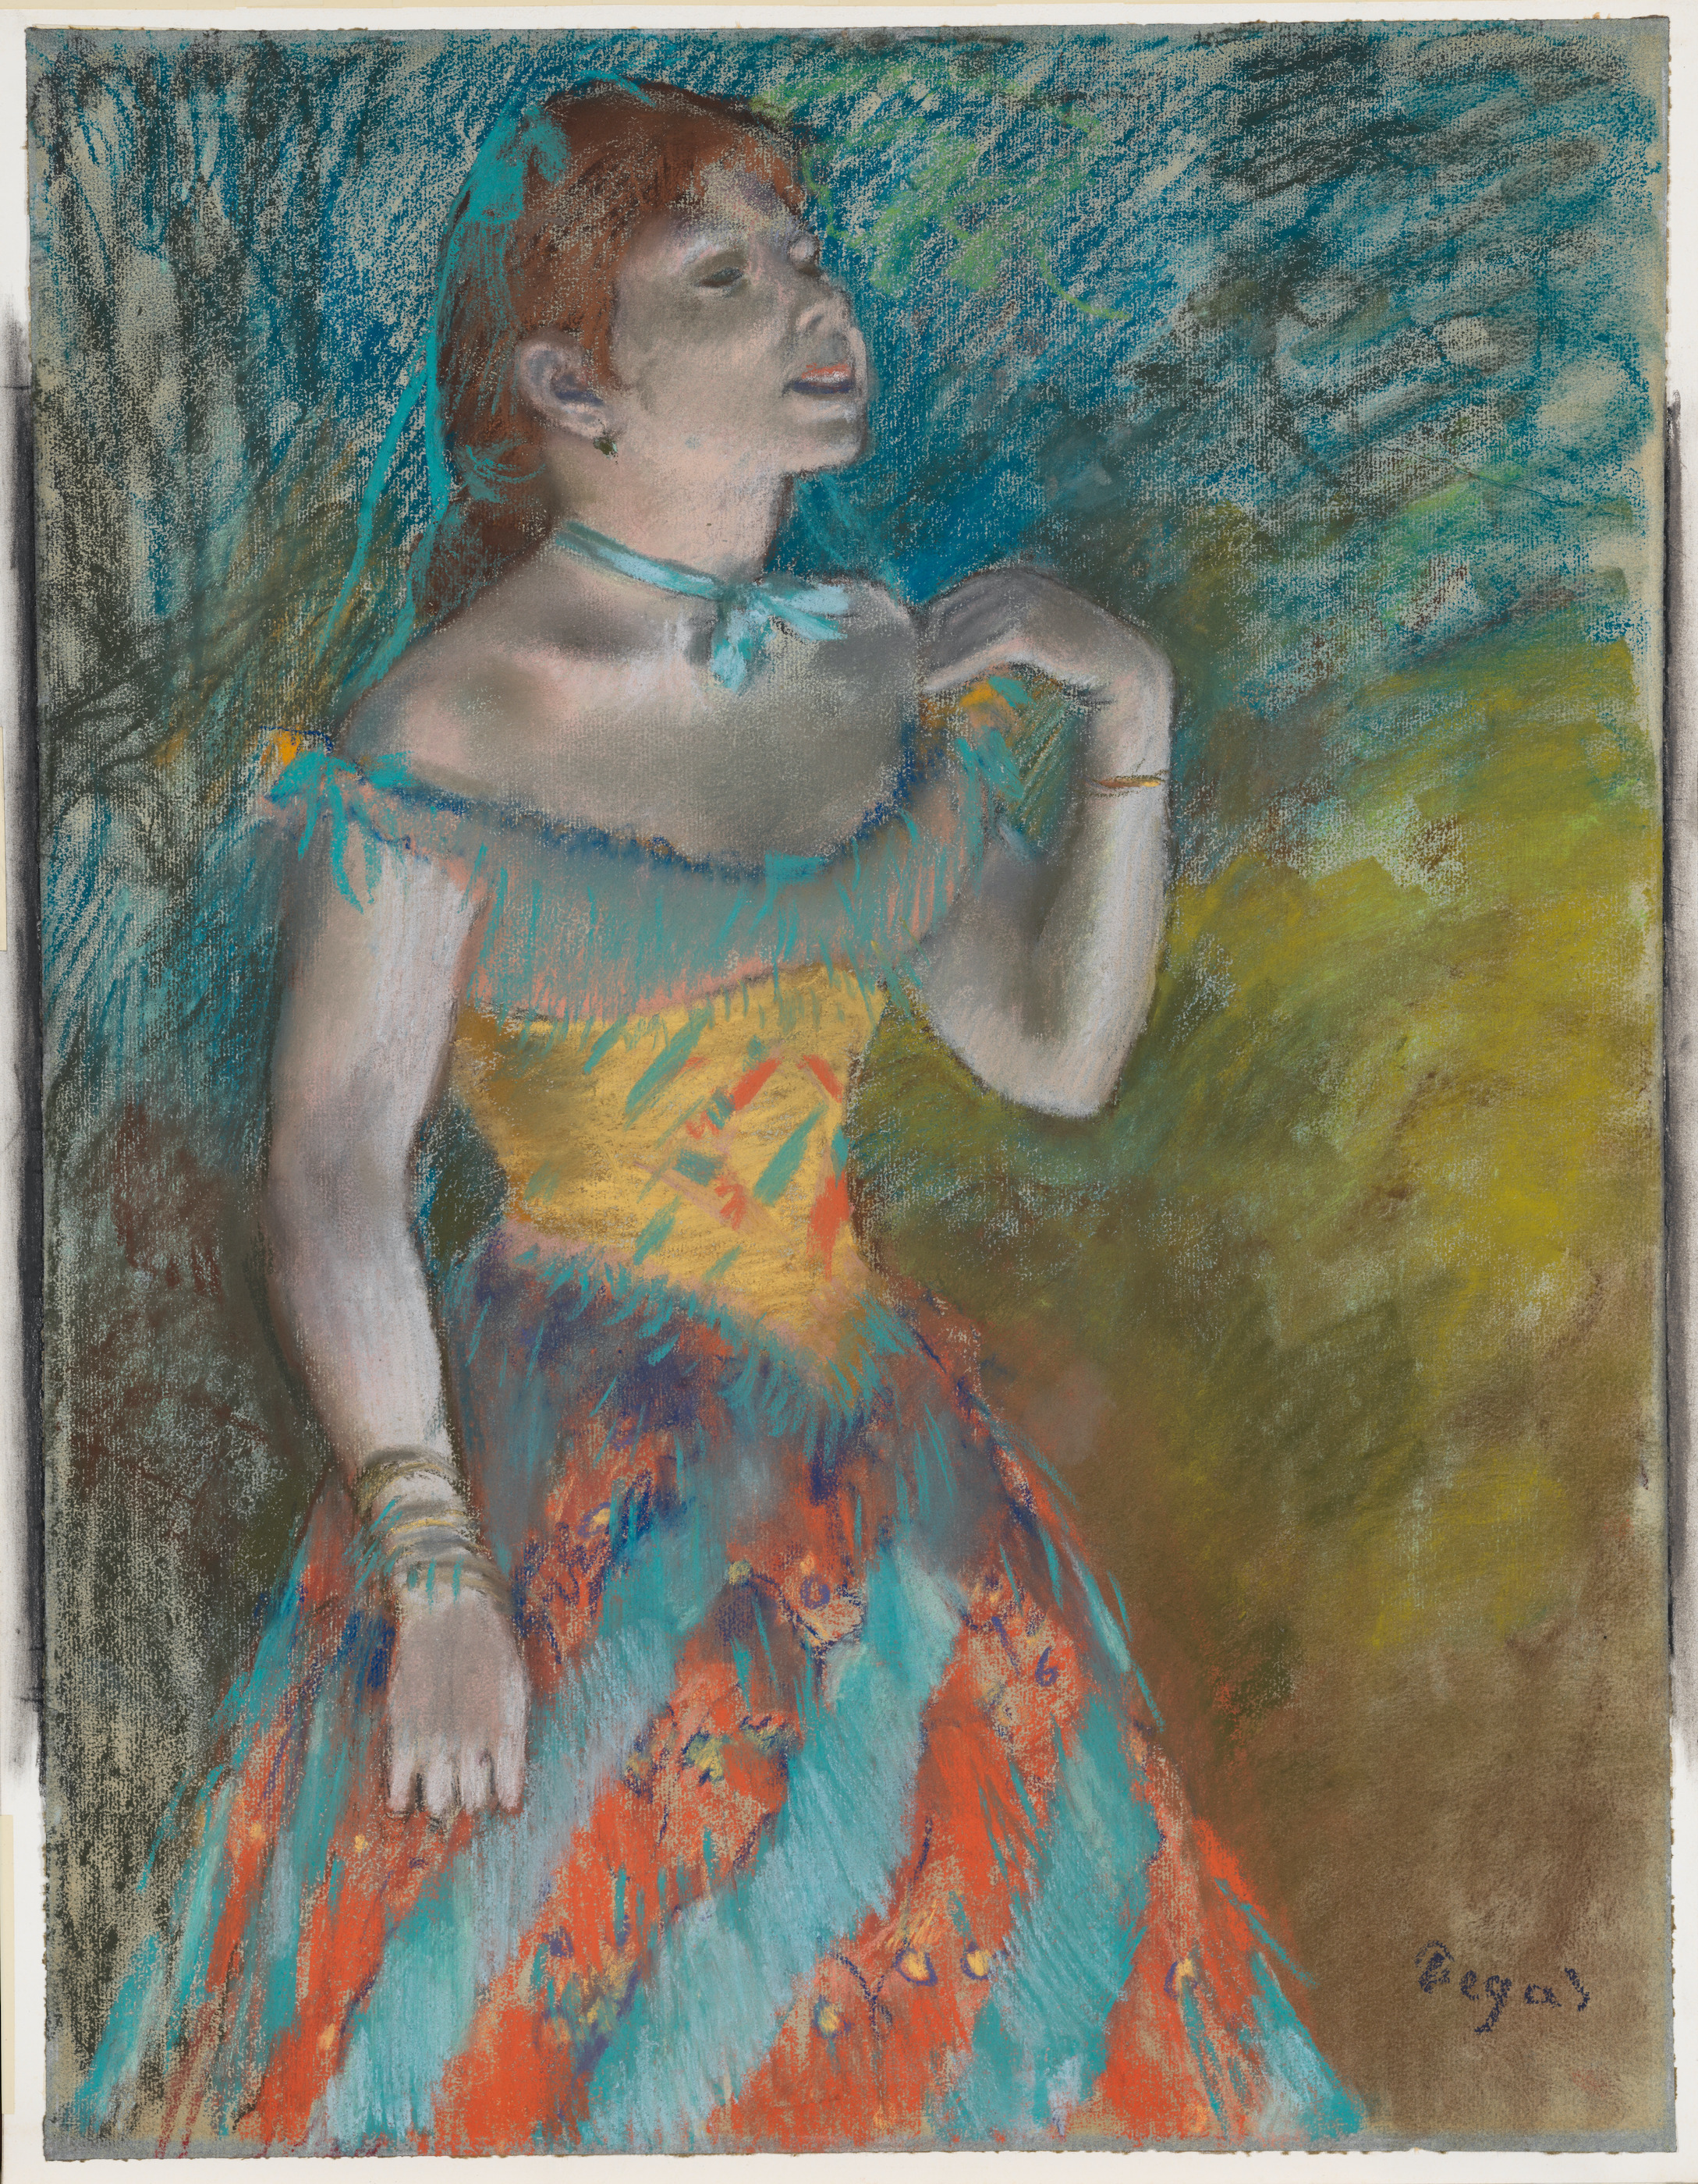 Sängerin in Grün by Edgar Degas - ca. 1884 - 60,3 x 46,4 cm Metropolitan Museum of Art